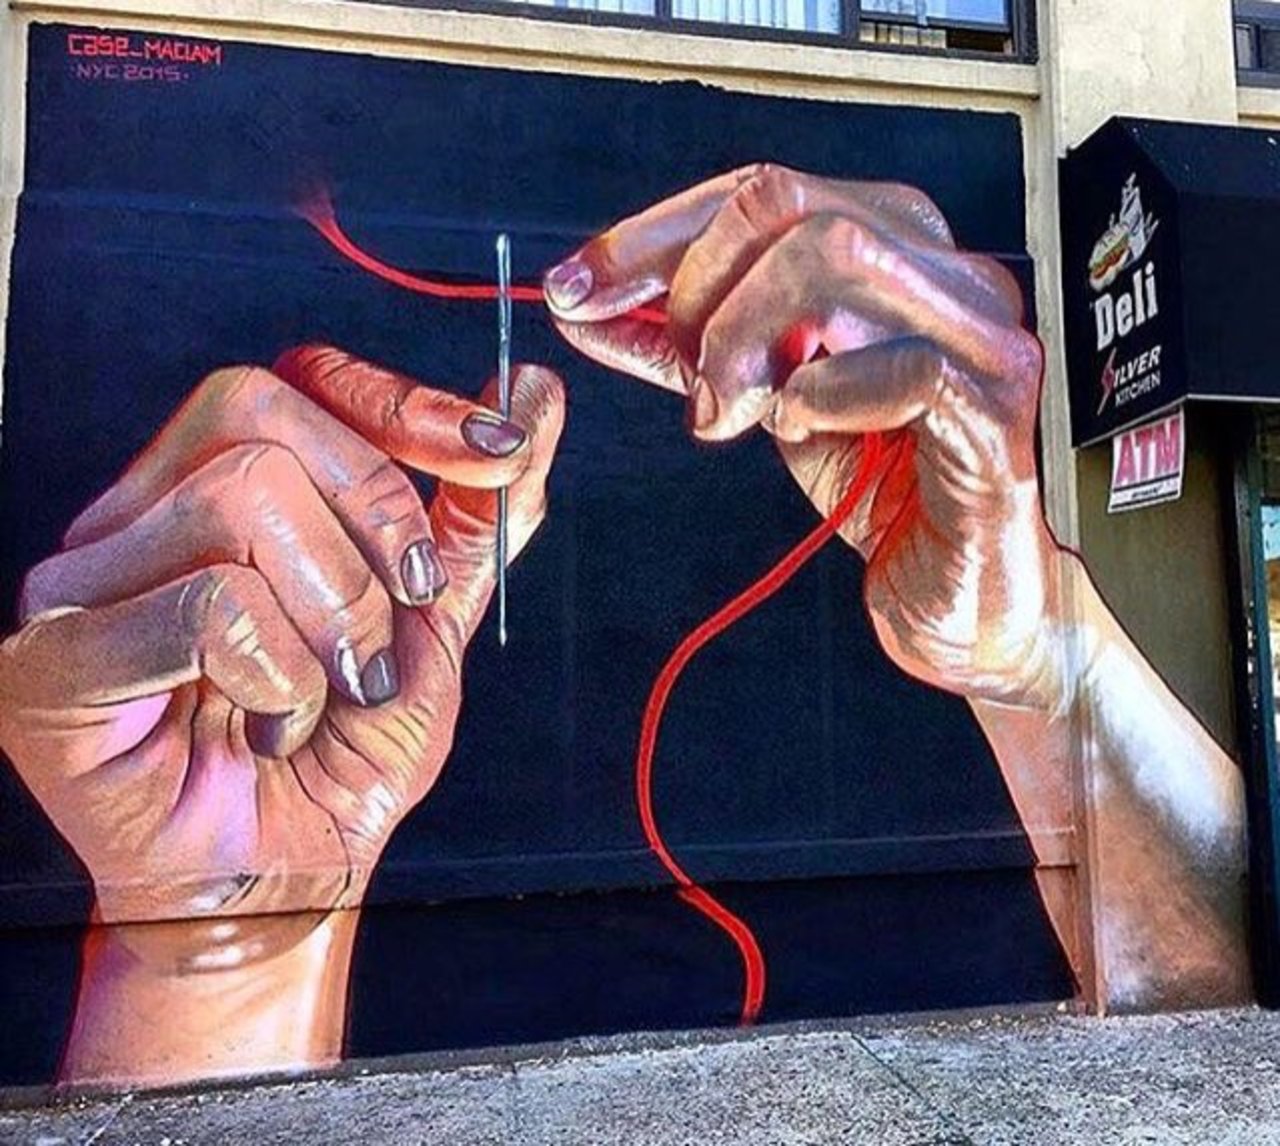 New Street Art by Case Ma'Claim in NYC 

#art #graffiti #mural #streetart https://t.co/19bxHxoZA9